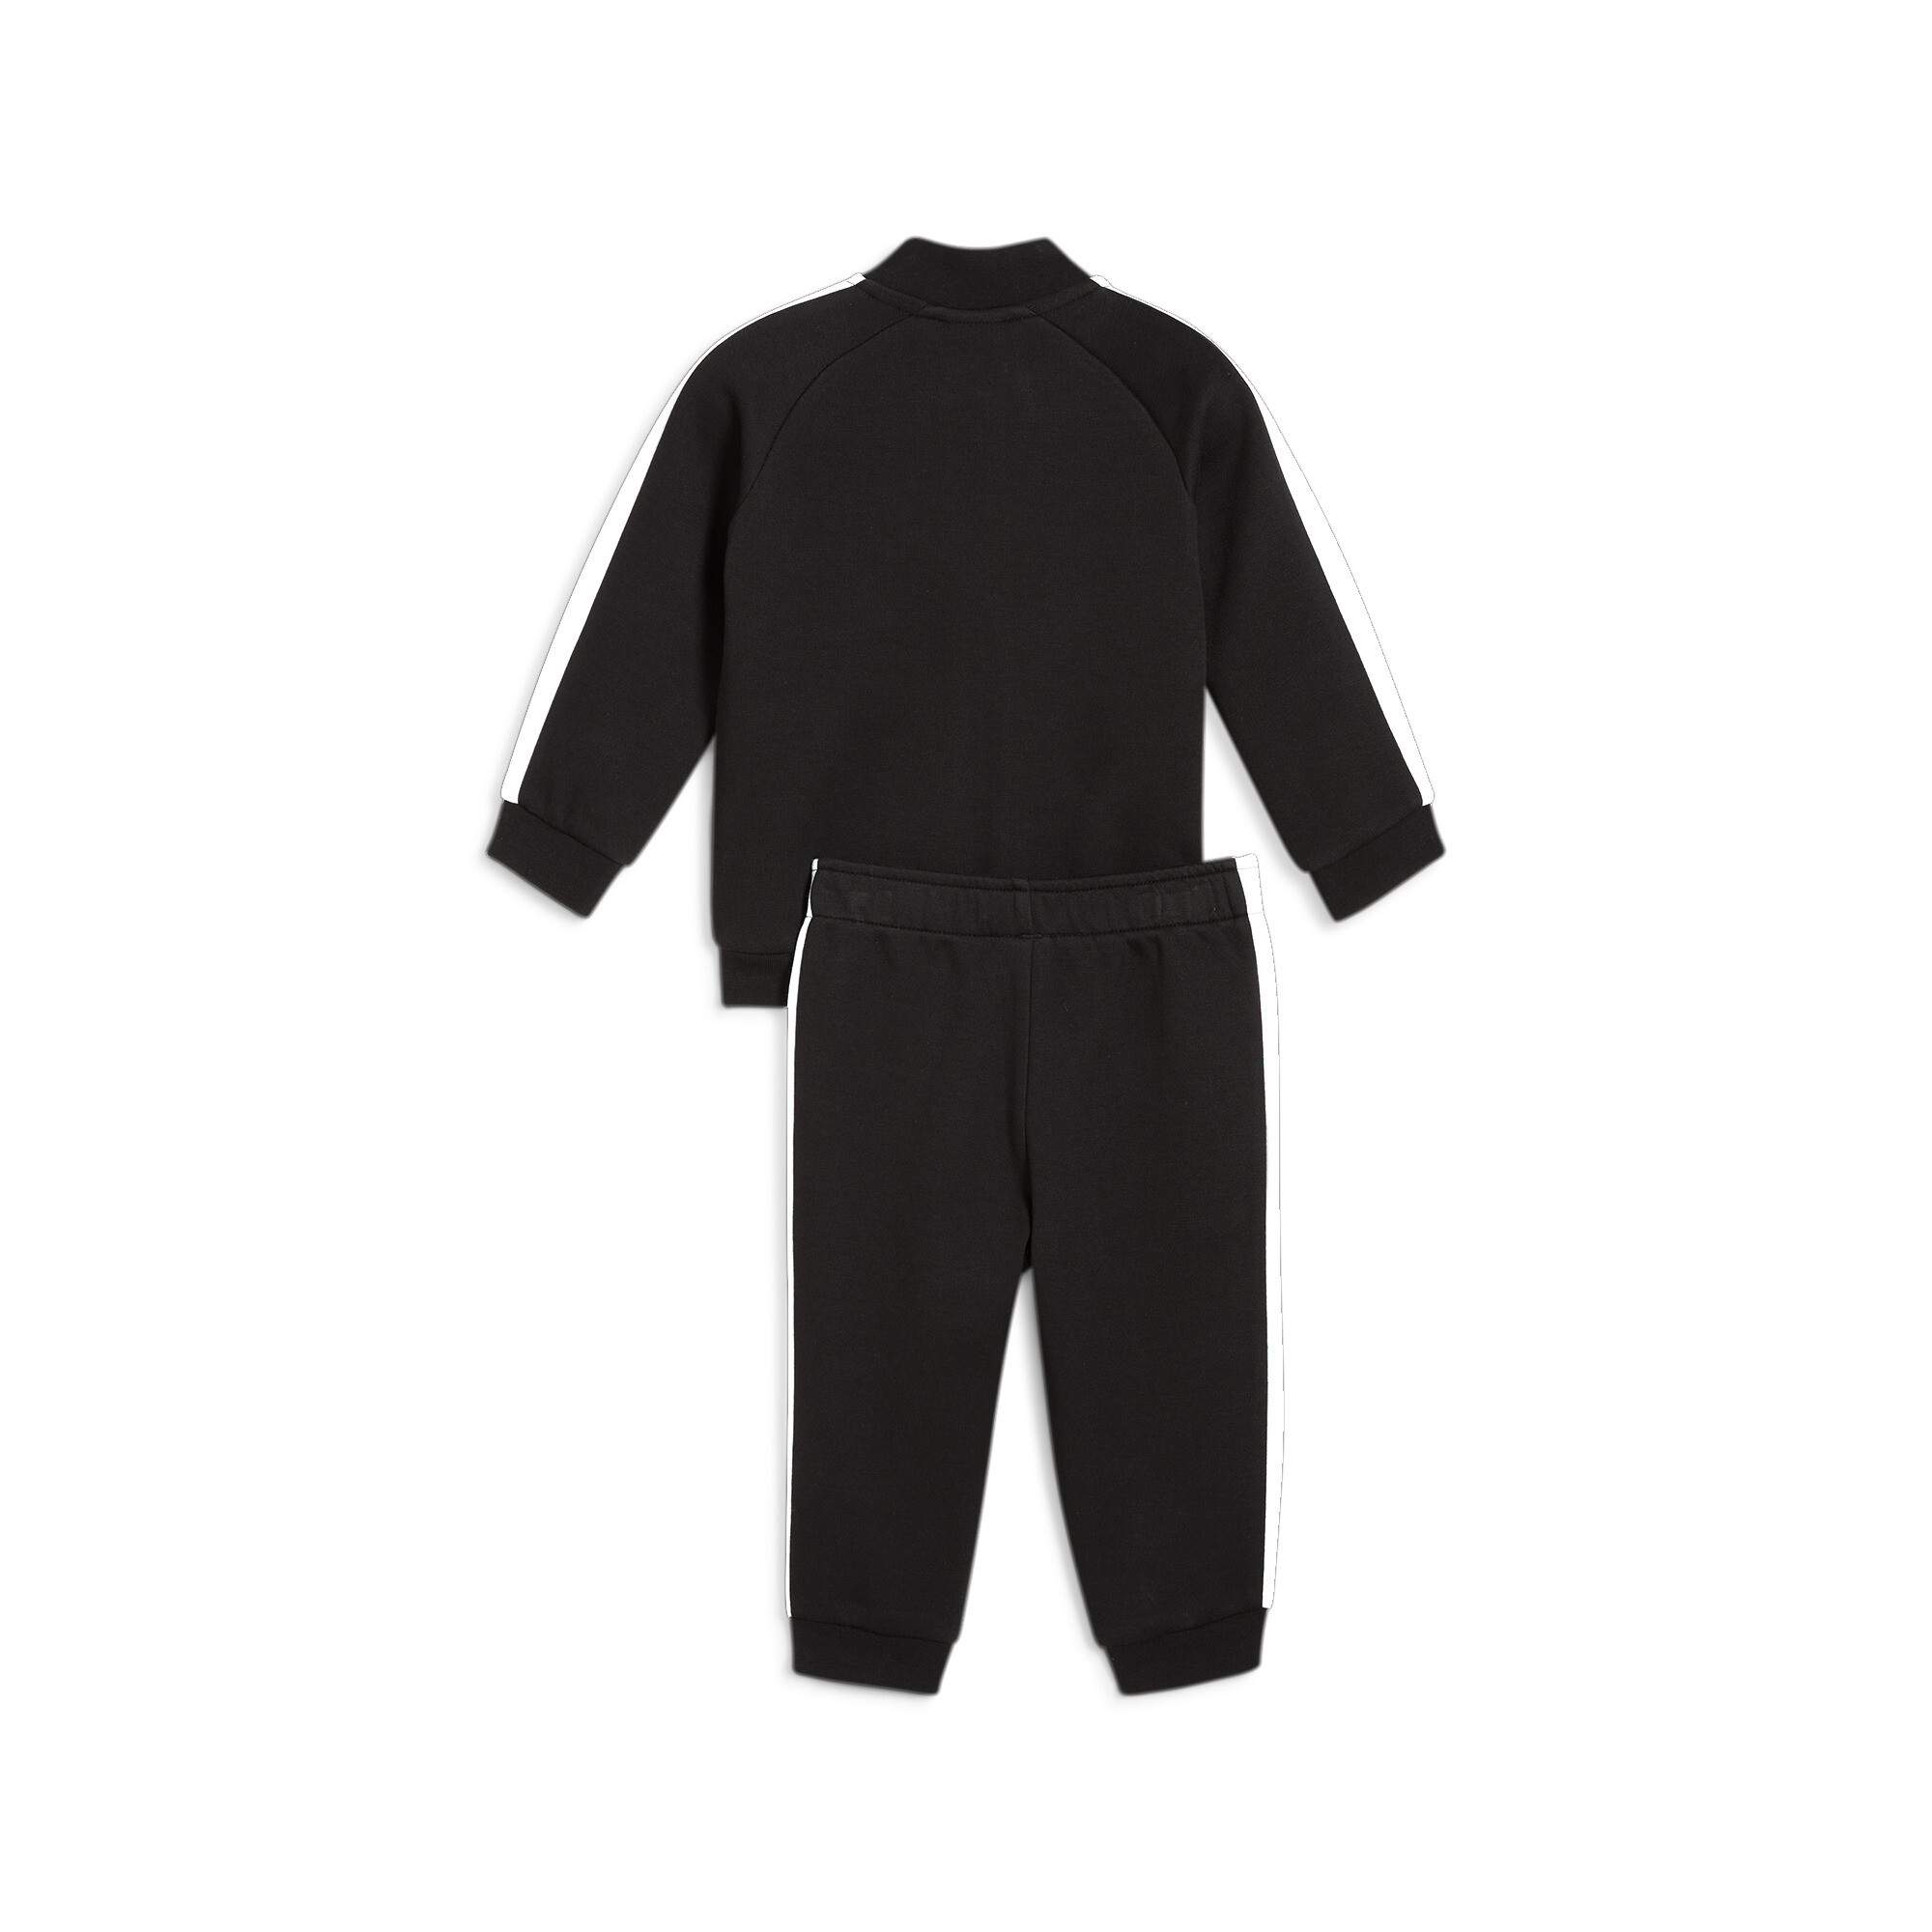 Puma MINICATS T7 ICONIC Baby Tracksuit Set, Black, Size 2-3Y, Clothing